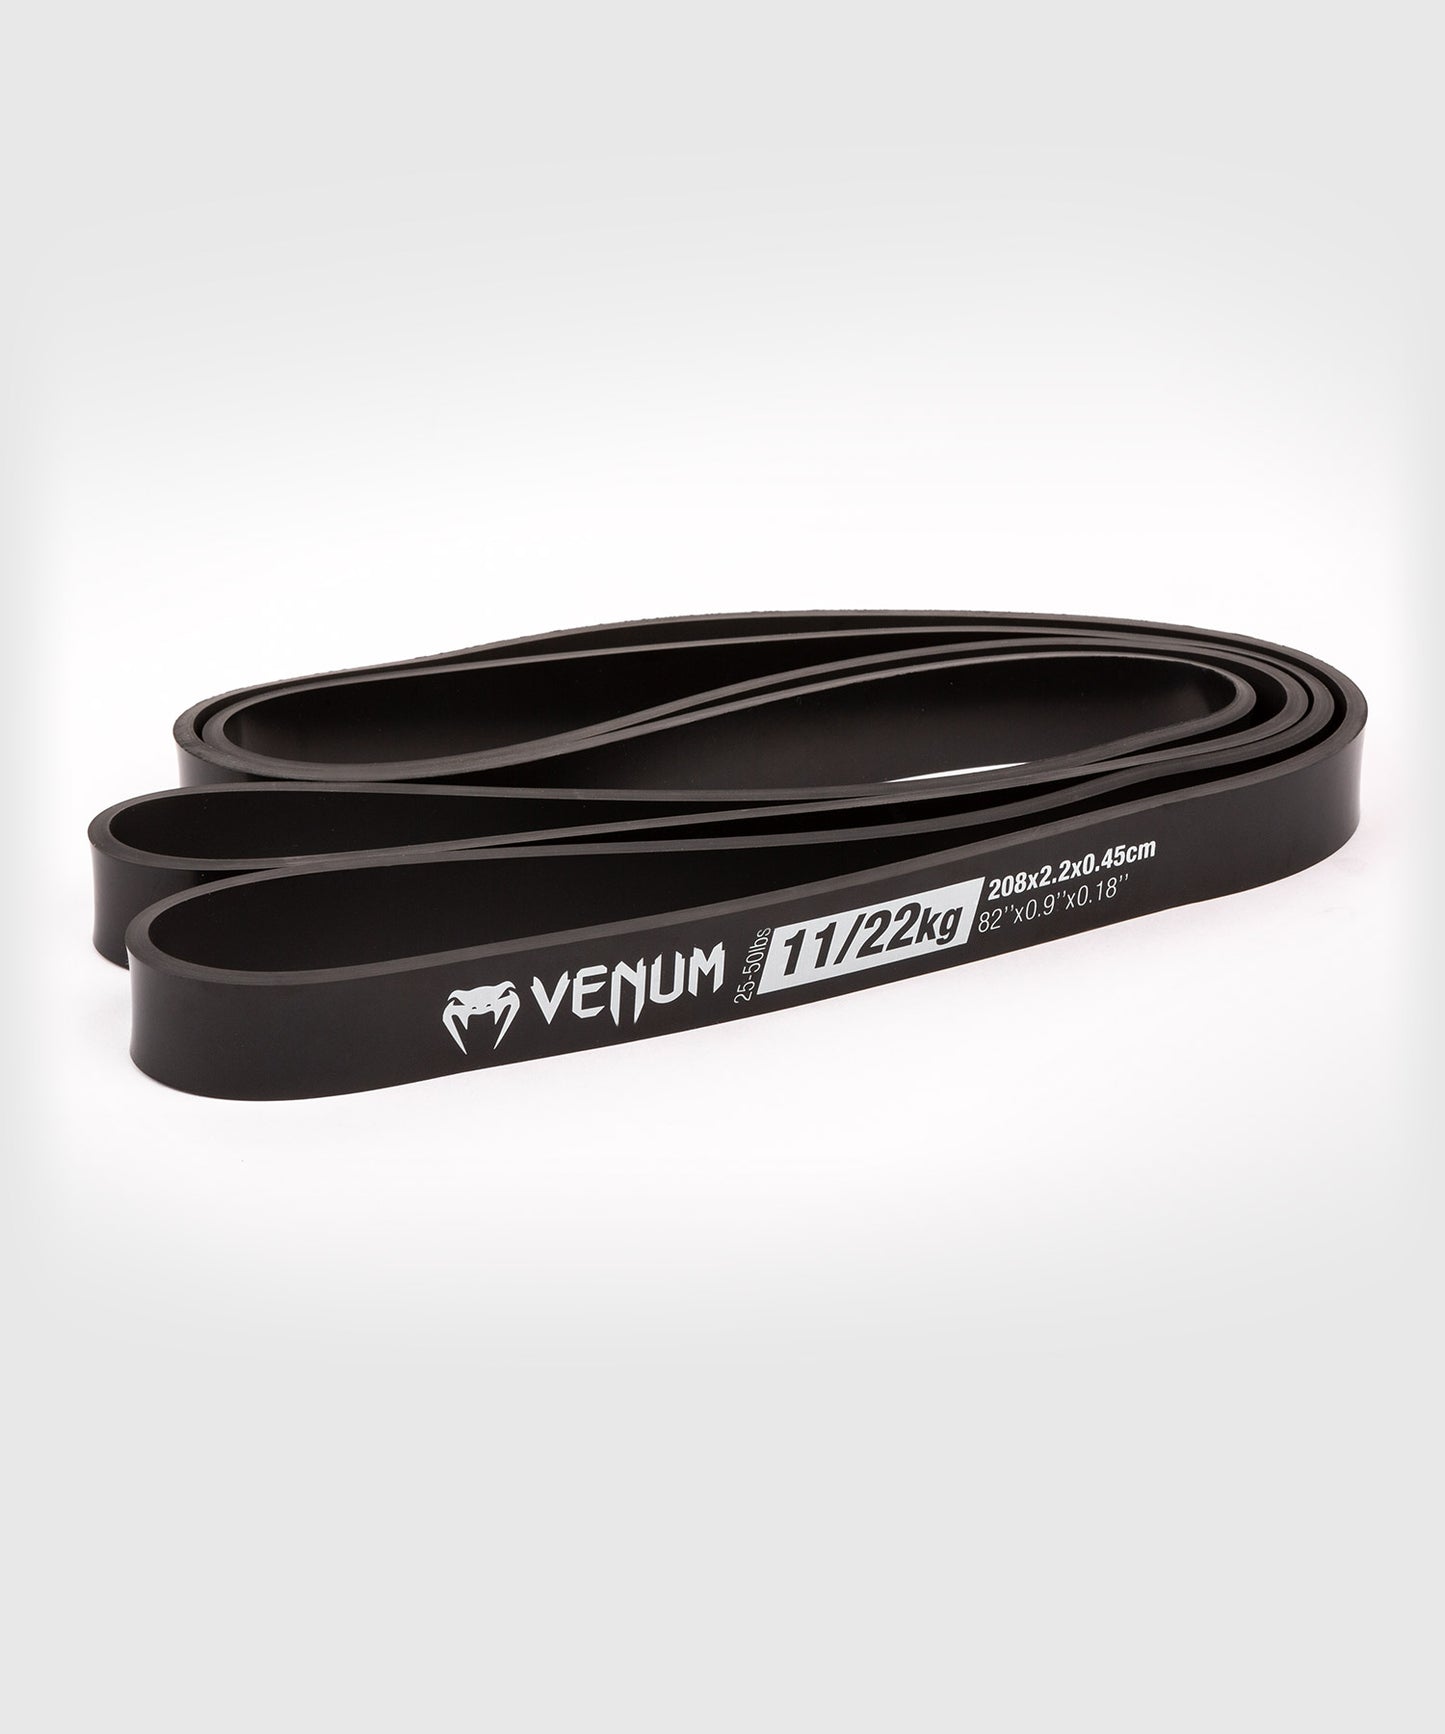 Bandas de resistencia Venum Challenger - negro - 11-22 Kg